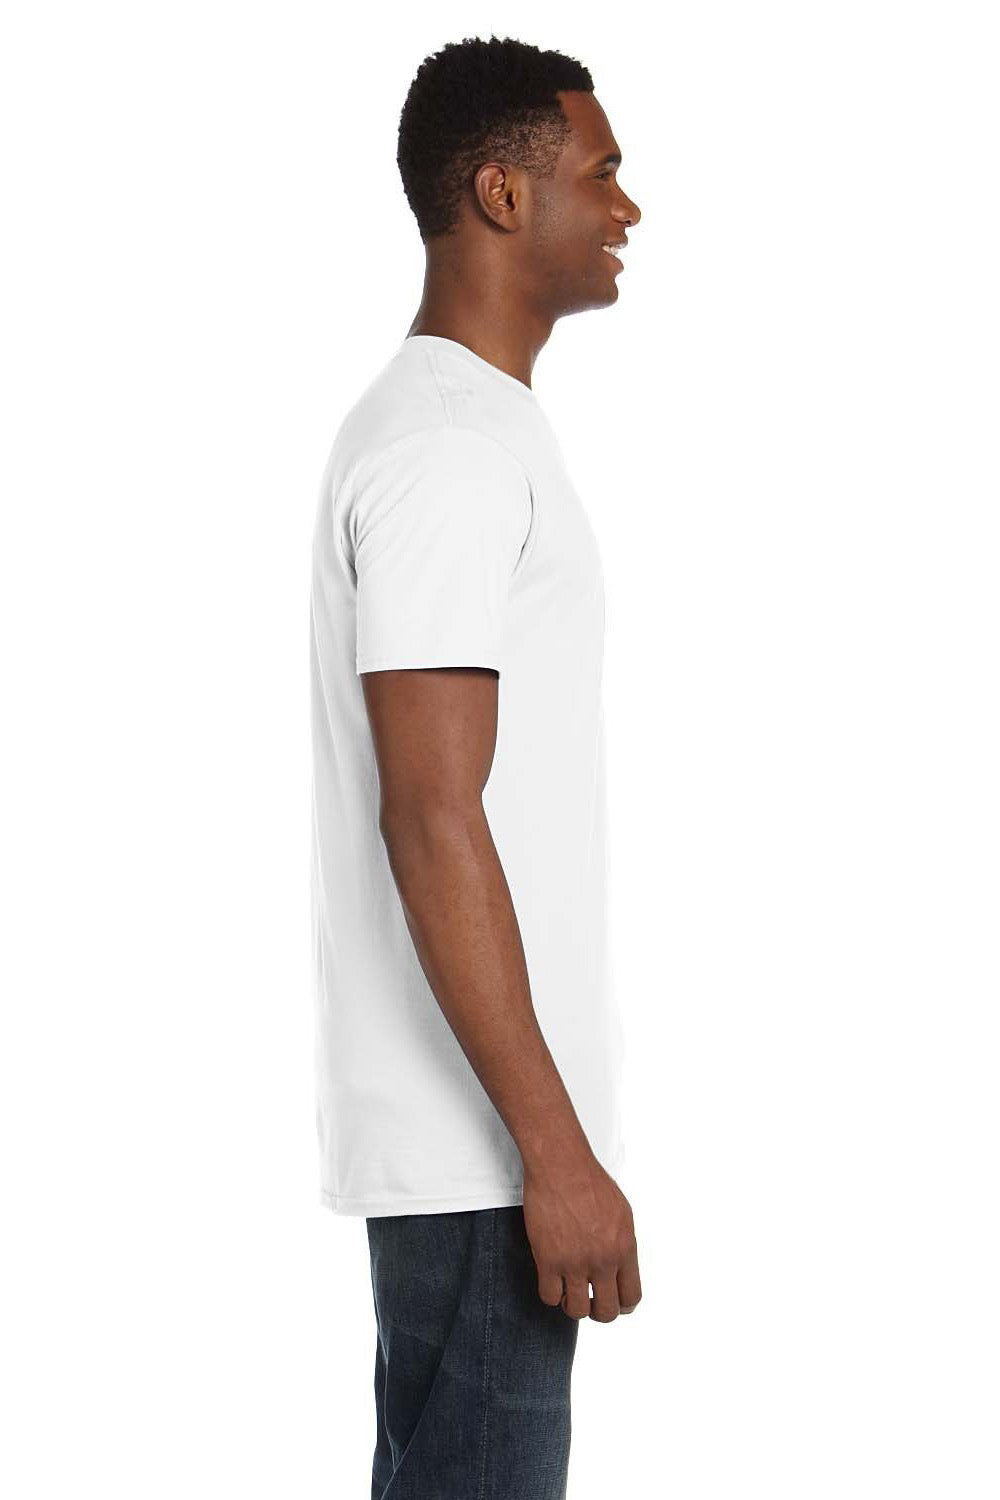 Hanes 498PT Mens Perfect-T PreTreat Short Sleeve Crewneck T-Shirt White Side